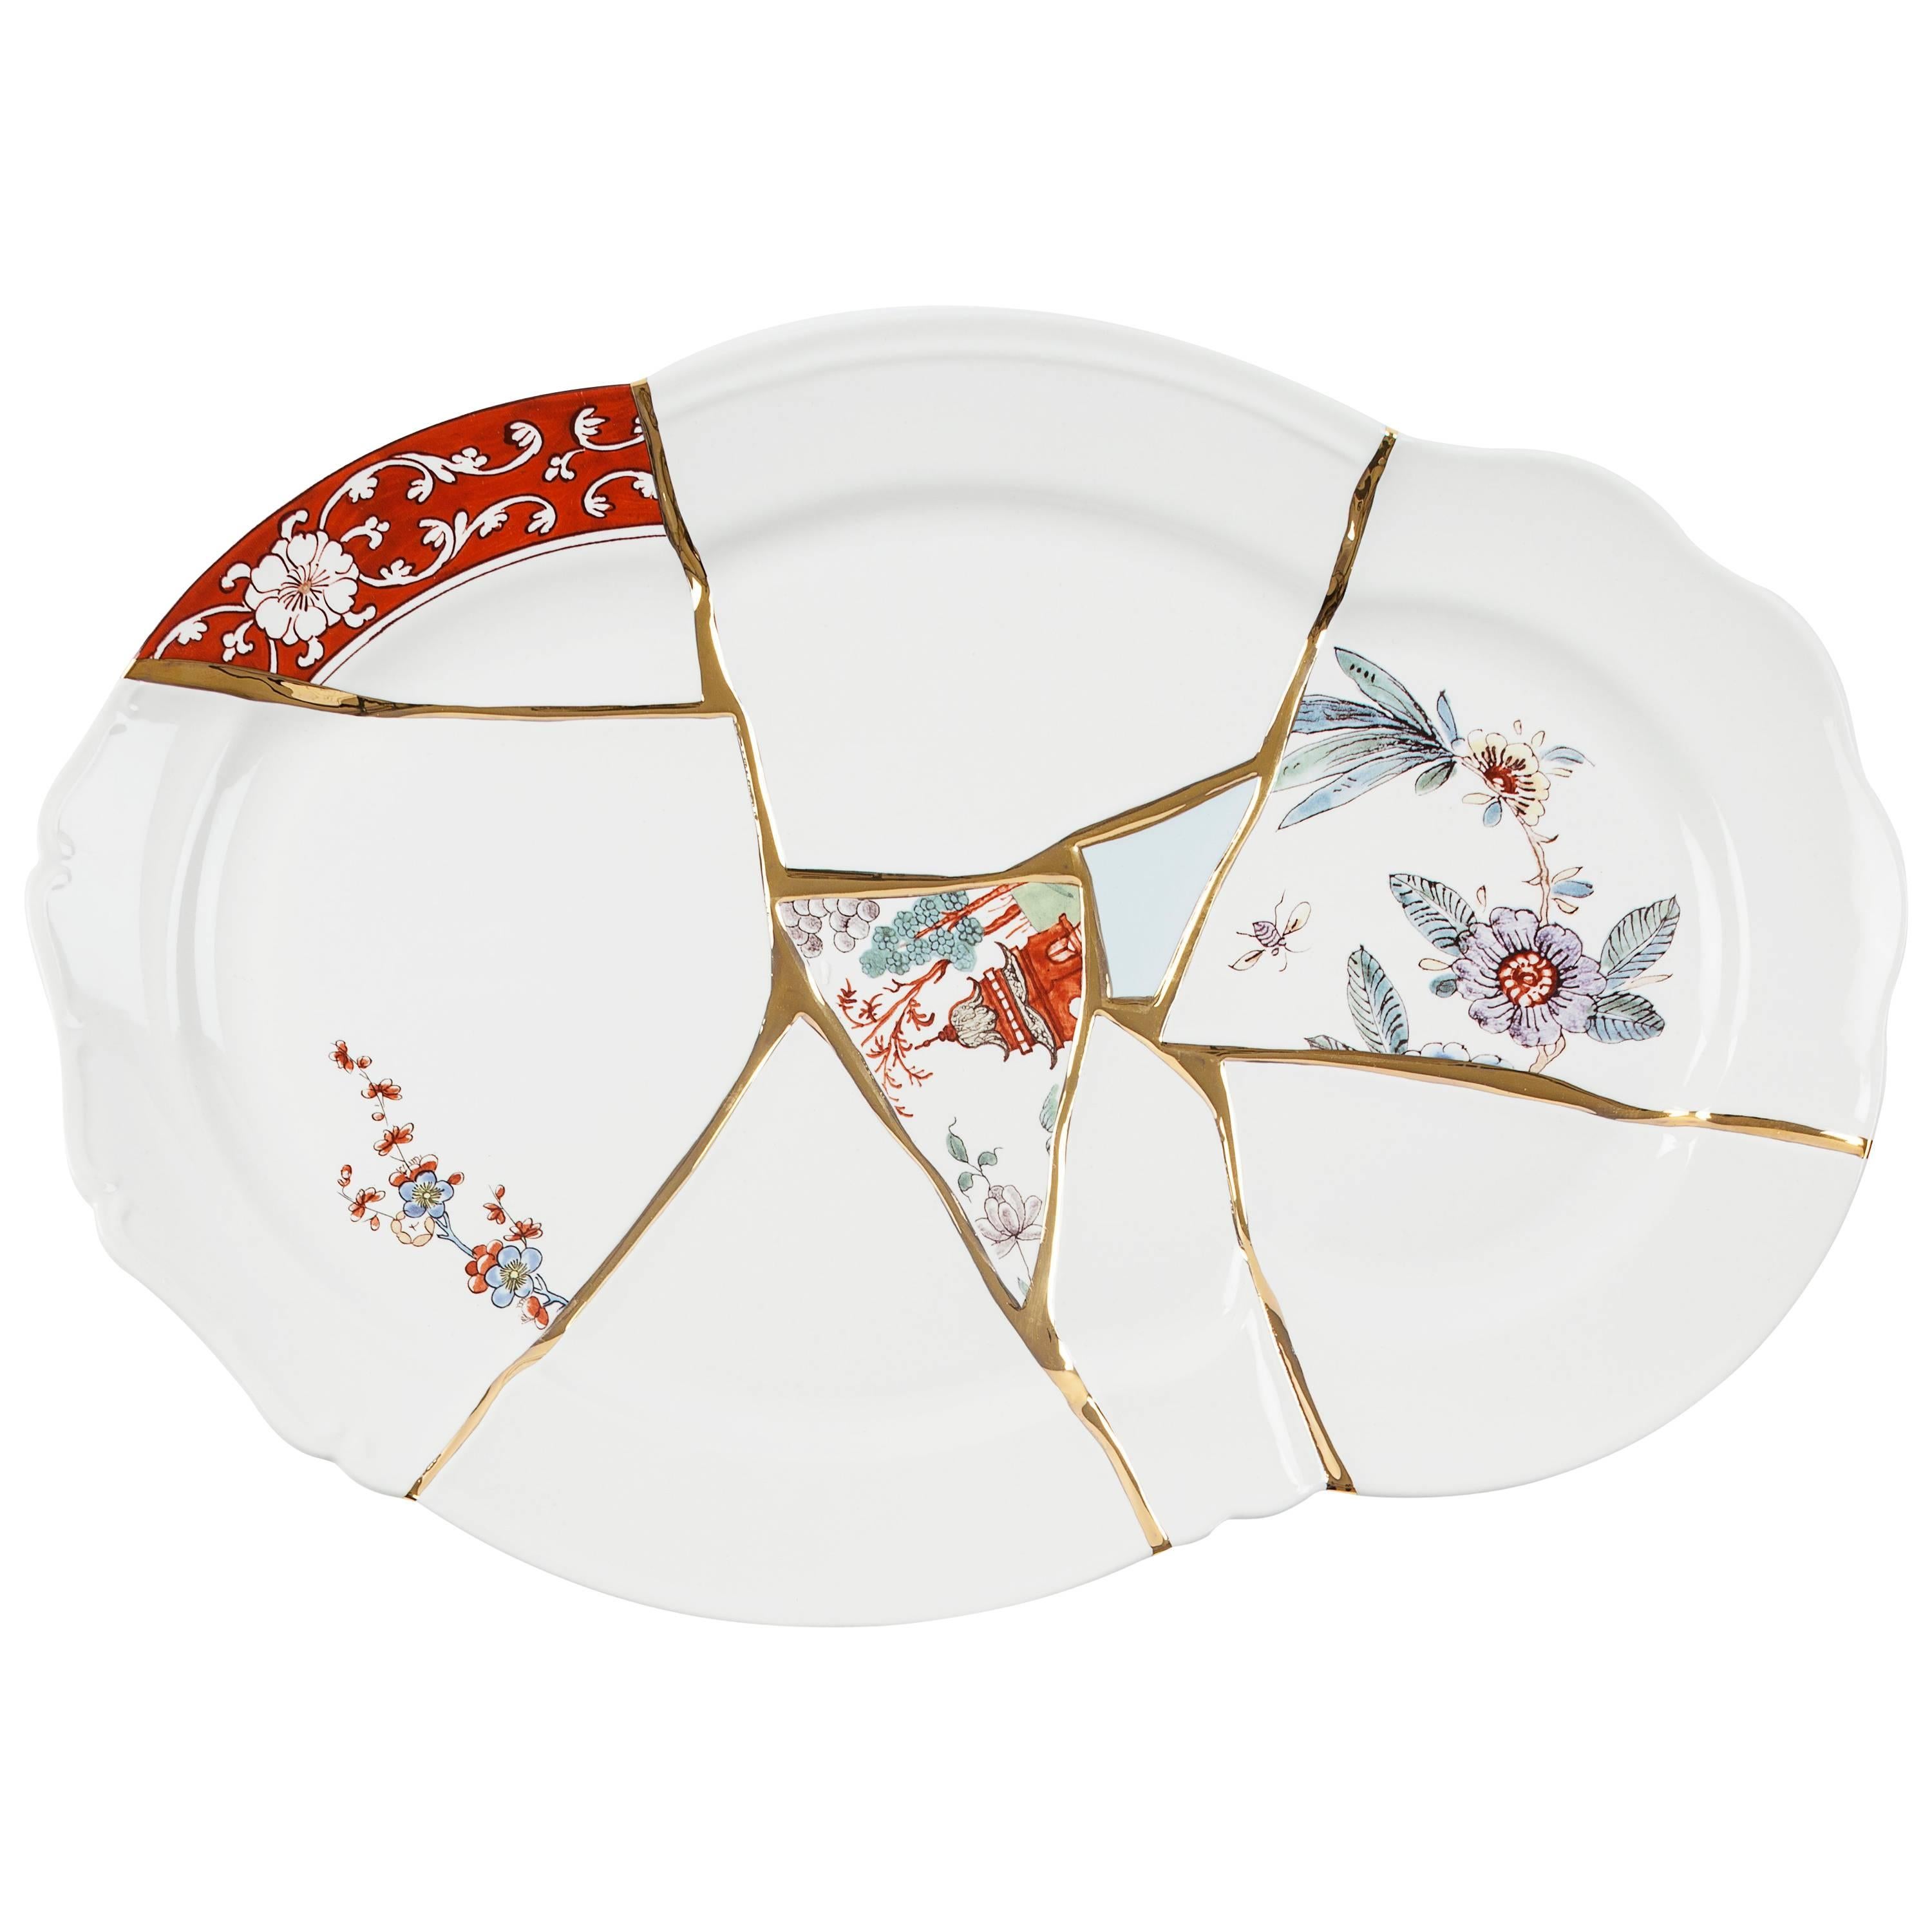 Seletti "Kintsugi" Tray in Porcelain For Sale